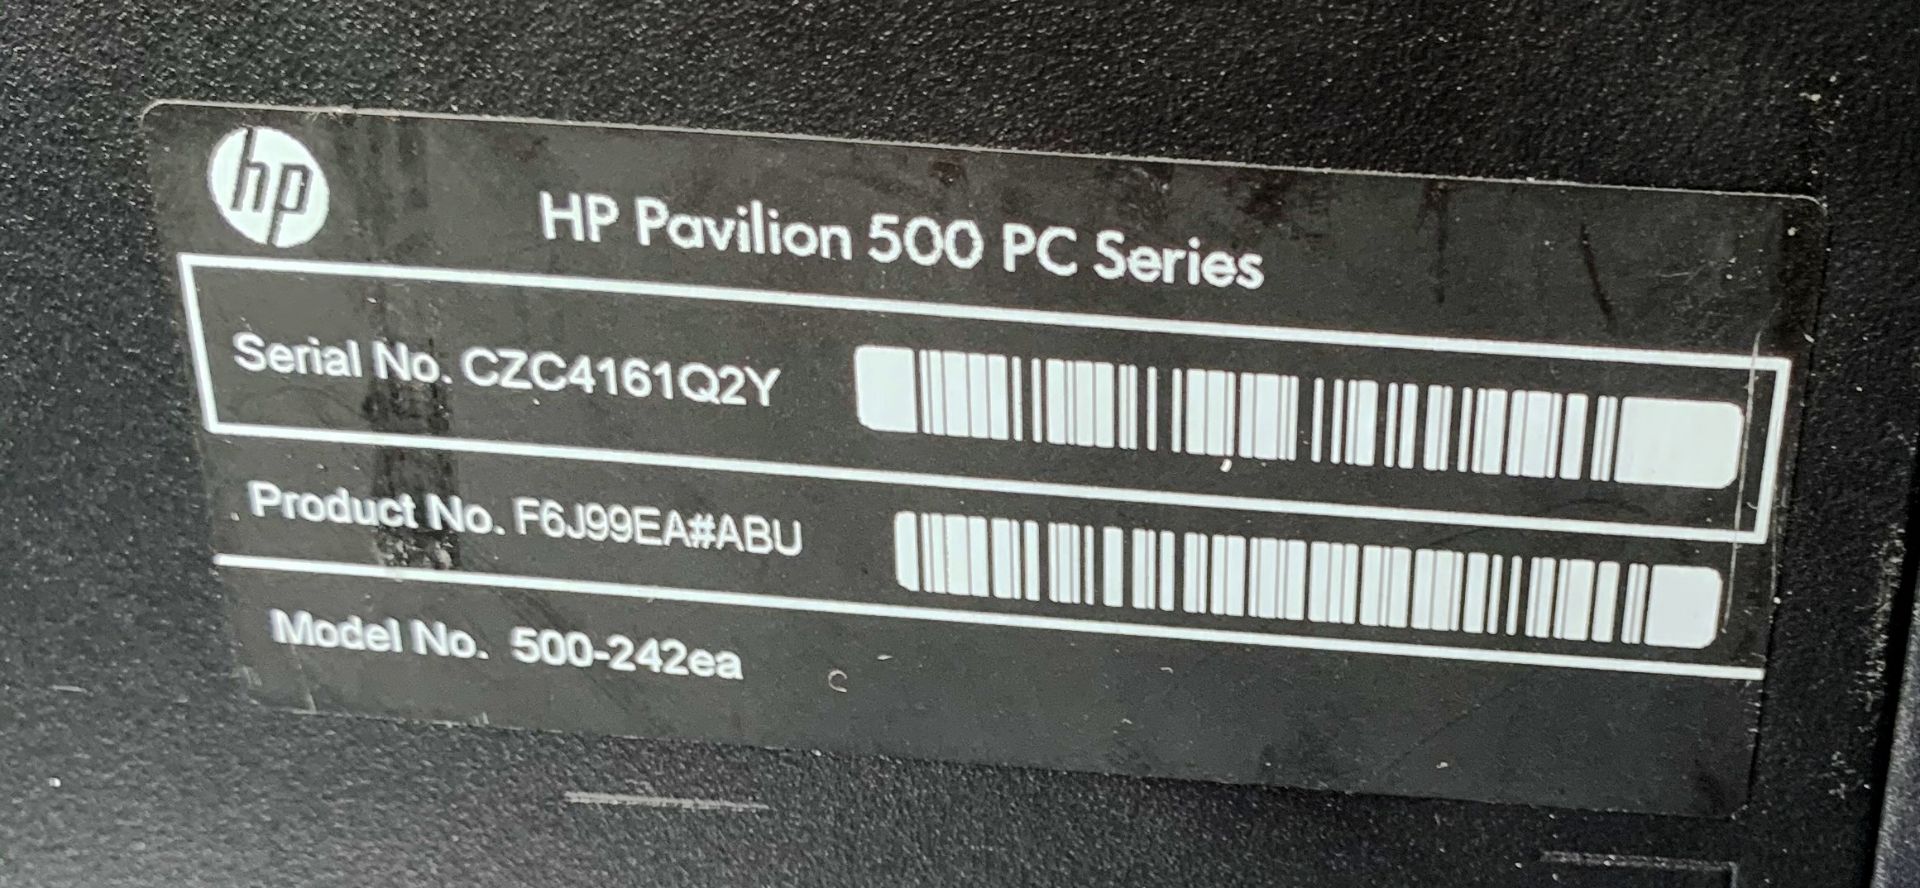 HP Pavilion 500 Desktop Computer | AMD A8-5500 APU w/ Radeon HD Graphics - Image 3 of 3